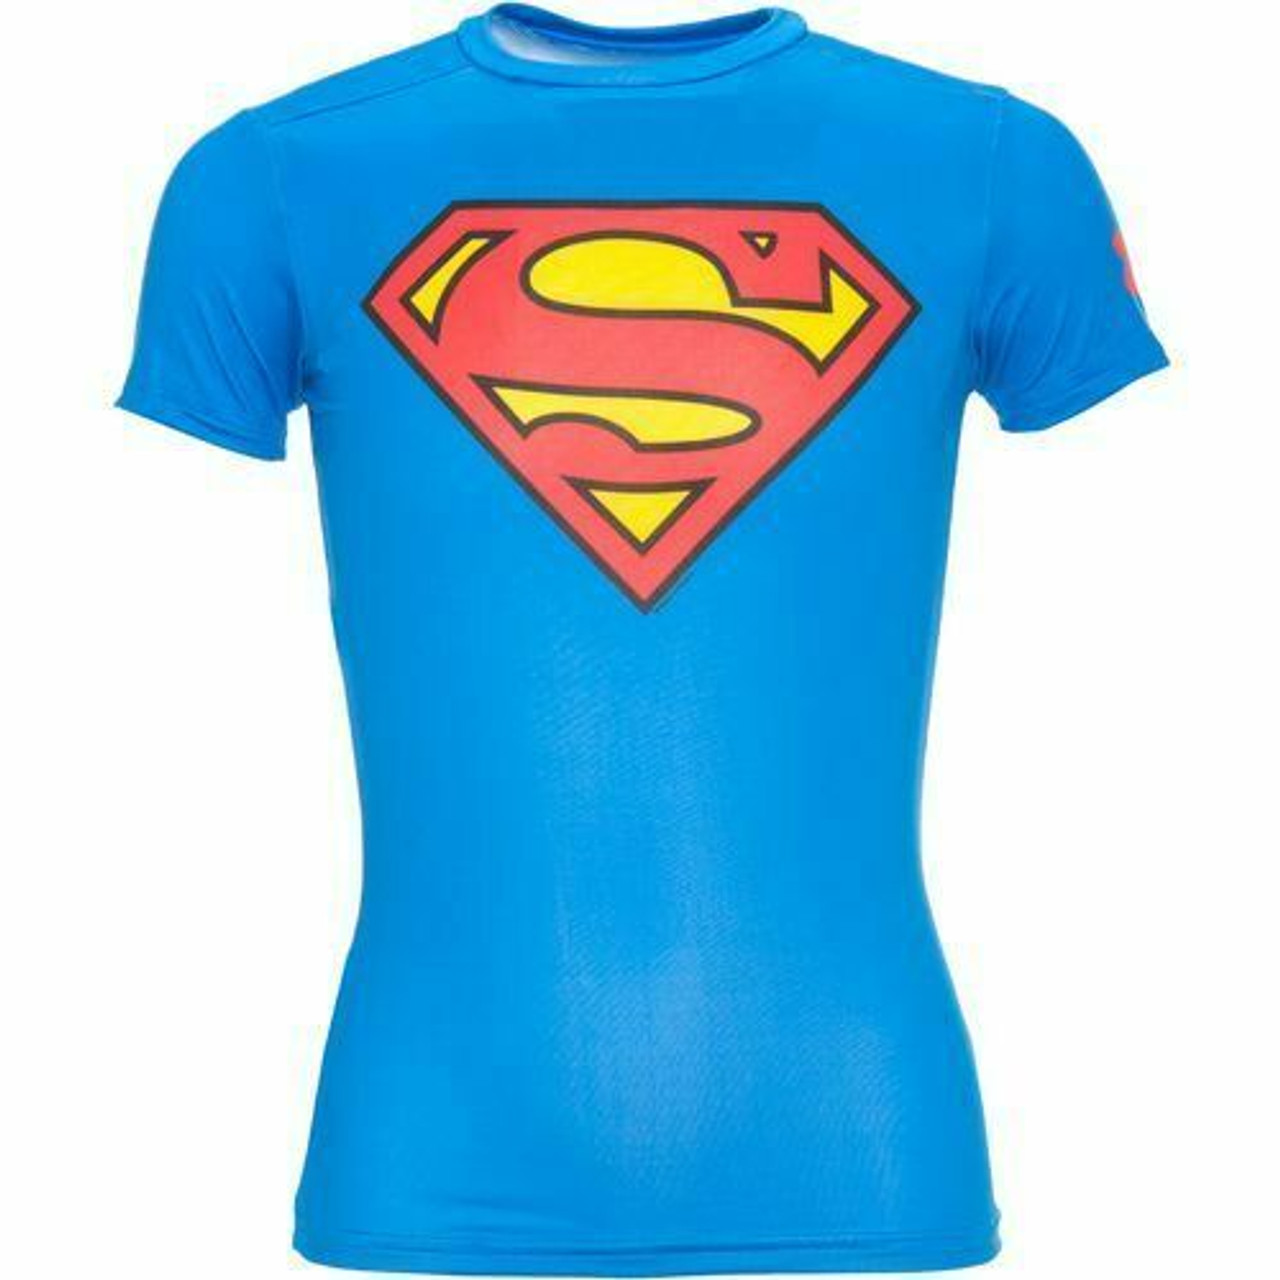 Under Armour Boys Alter Ego Shirt Superman 1244392-401 Sporting Goods